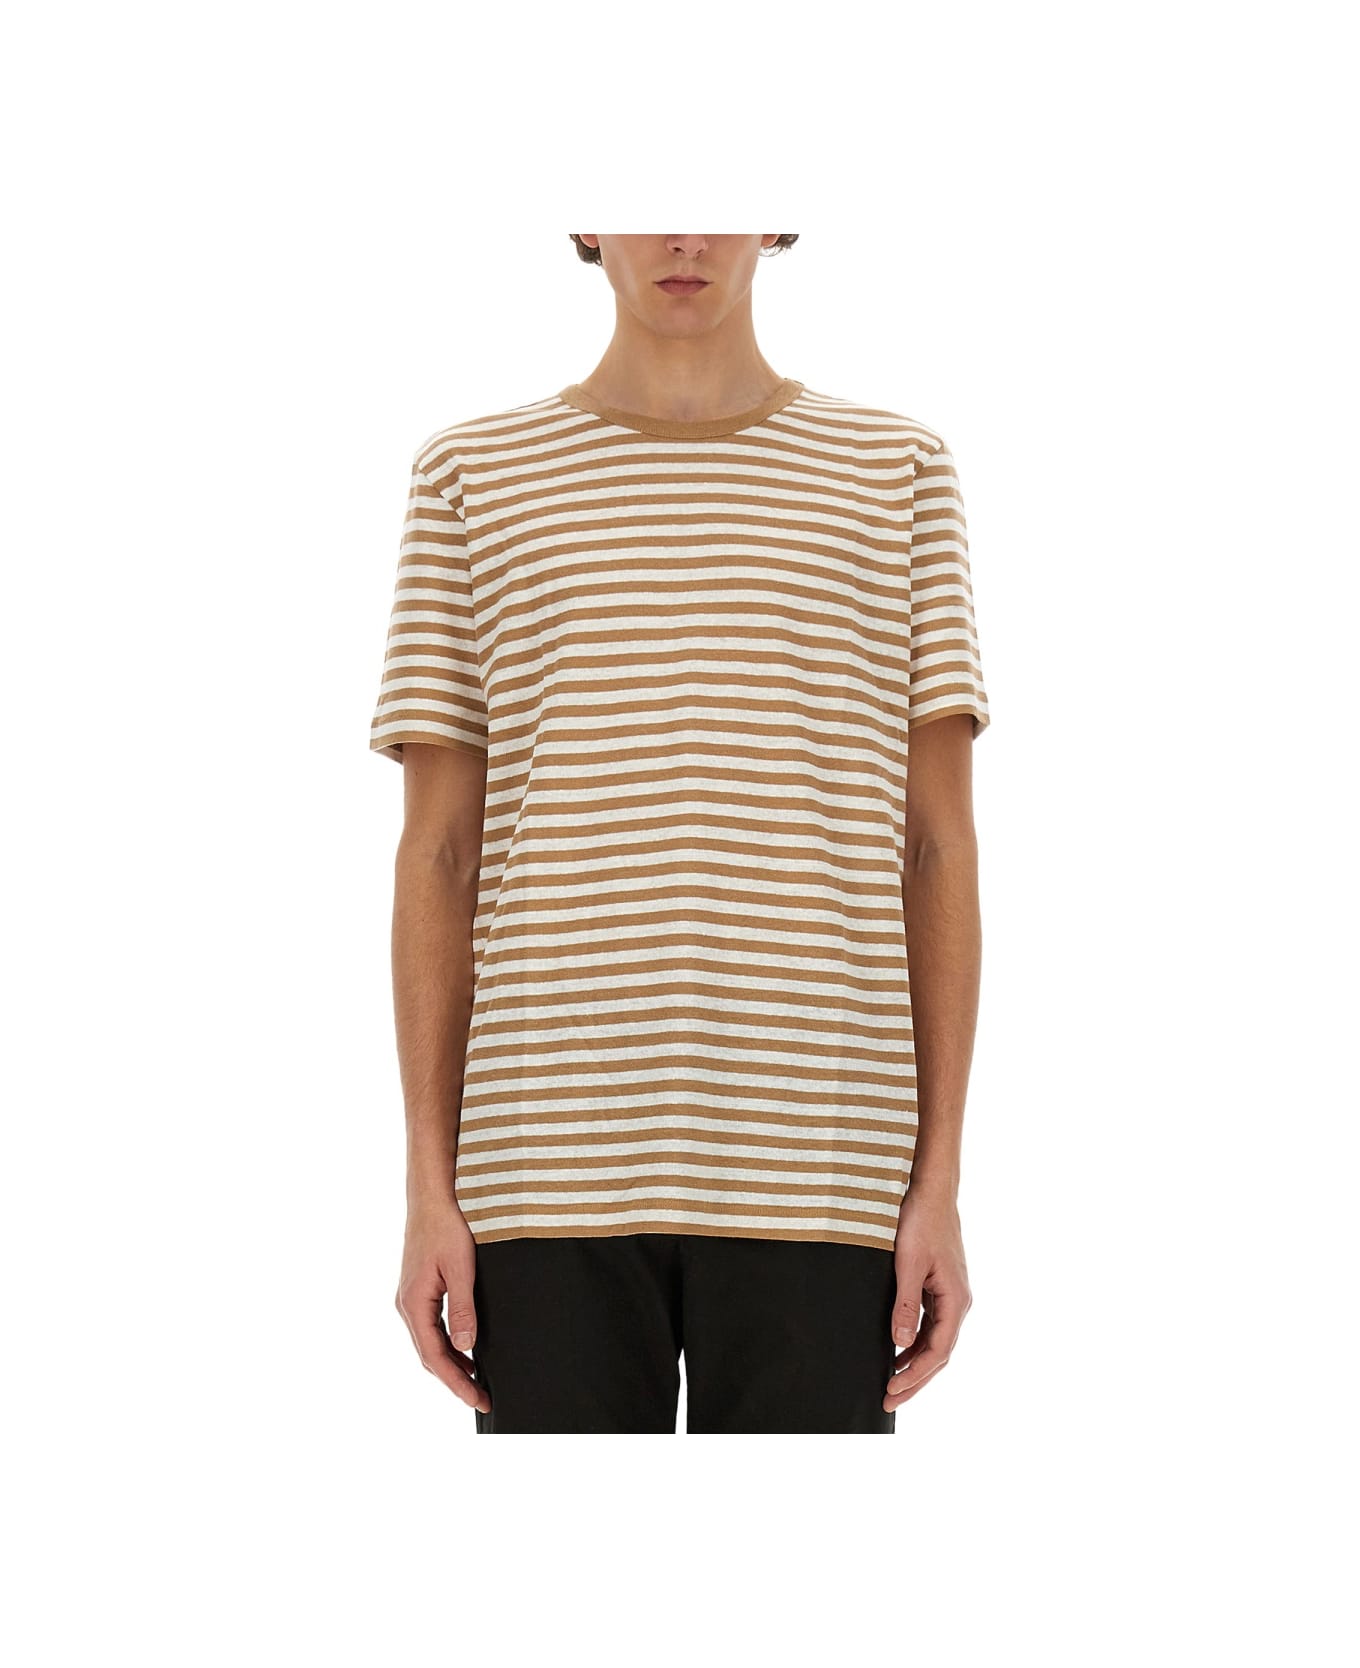 Hugo Boss Striped T-shirt - BEIGE シャツ